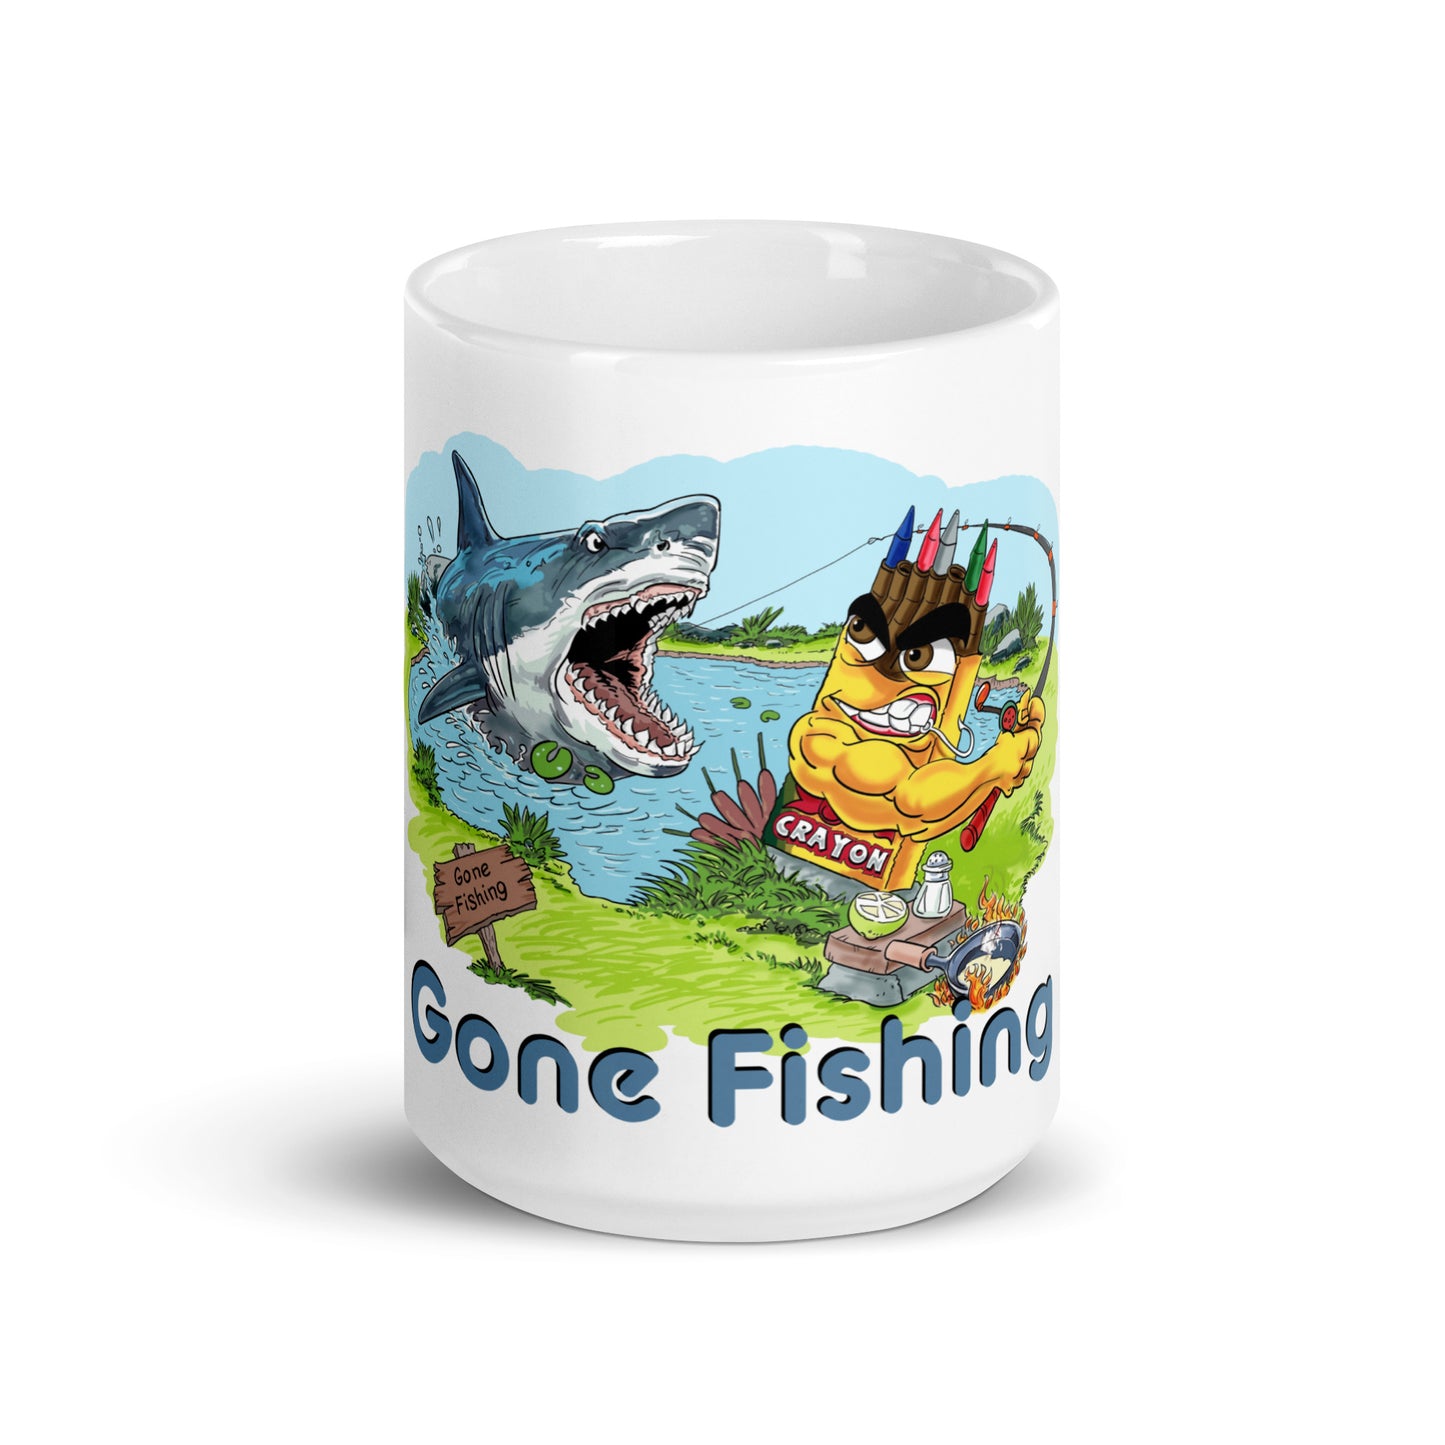 Gone Fishing - White glossy mug